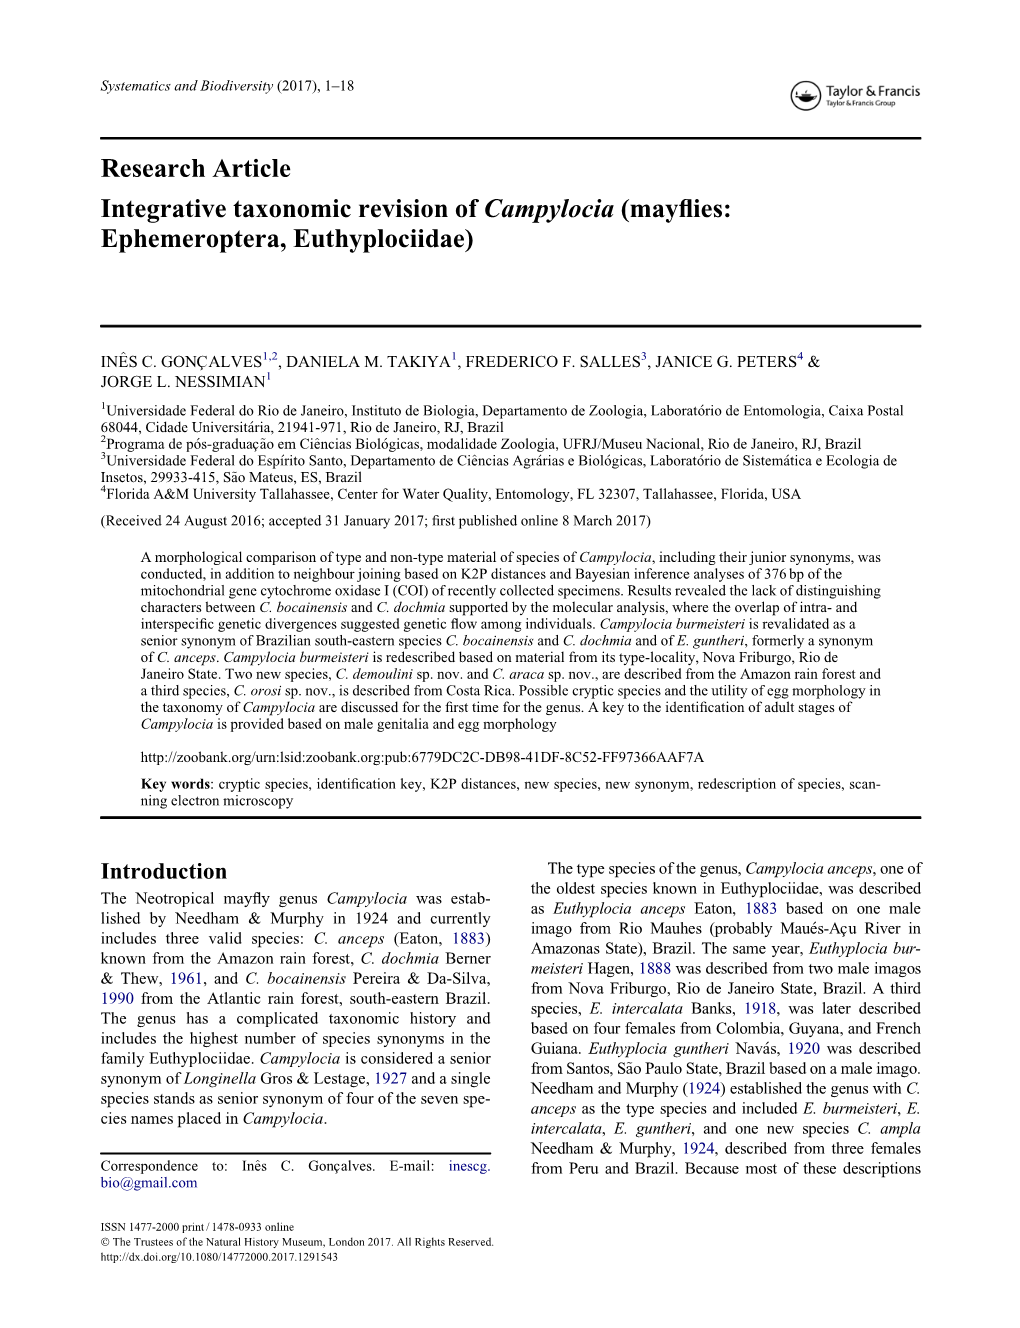 Integrative Taxonomic Revision of Campylocia (Mayﬂies: Ephemeroptera, Euthyplociidae)